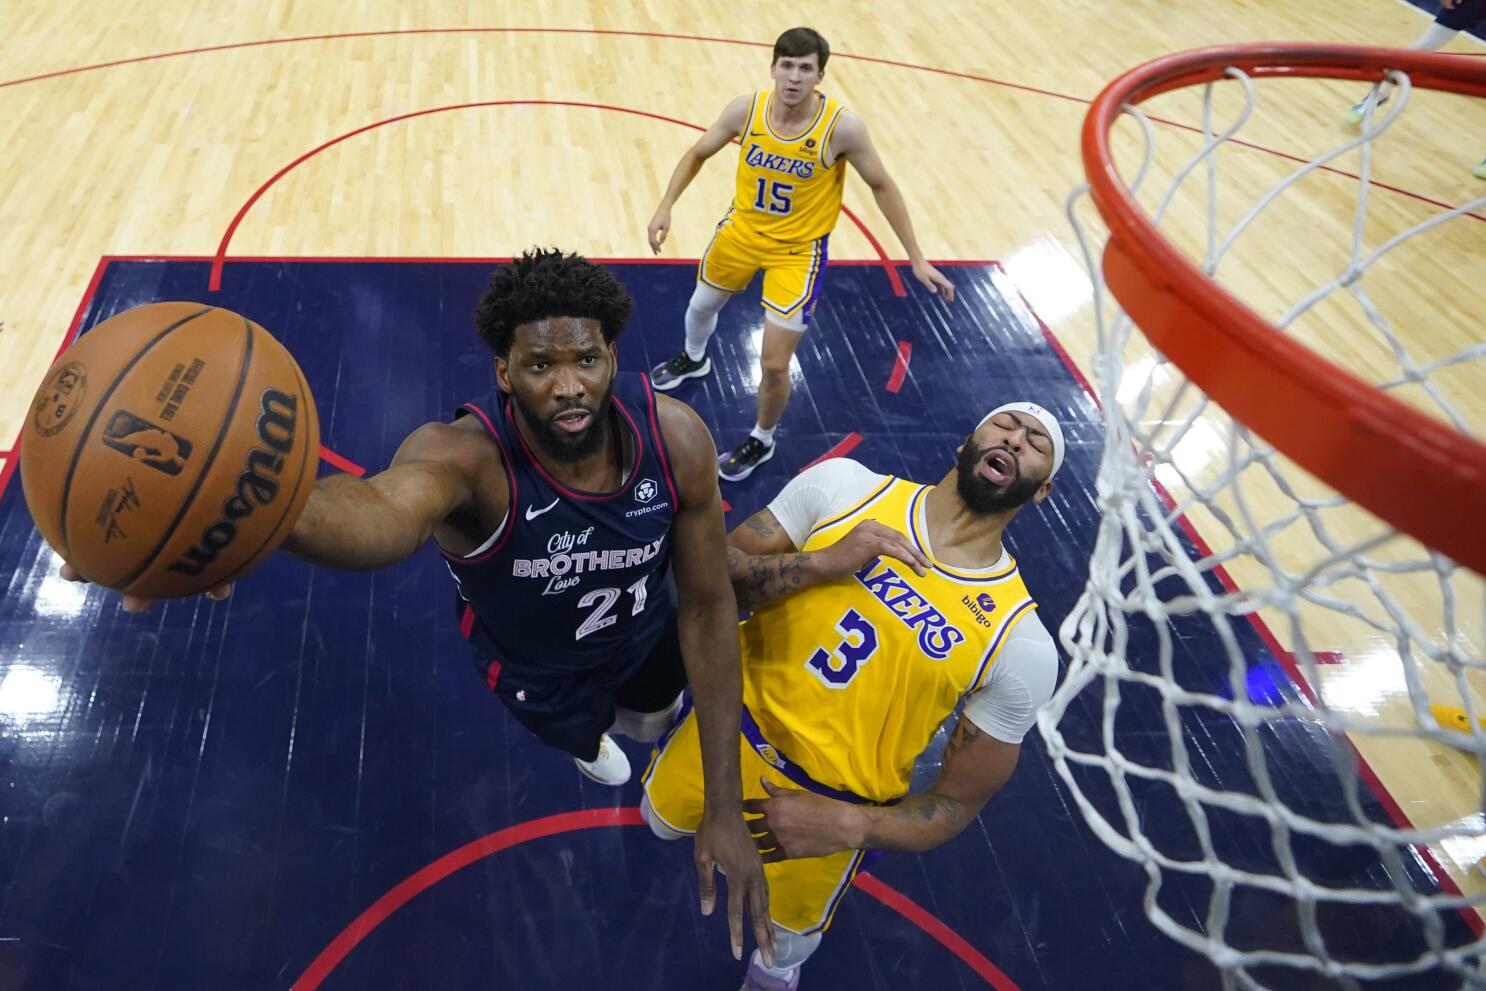 Lakers vs. Kings Final Score: Lakers backups dominate Kings